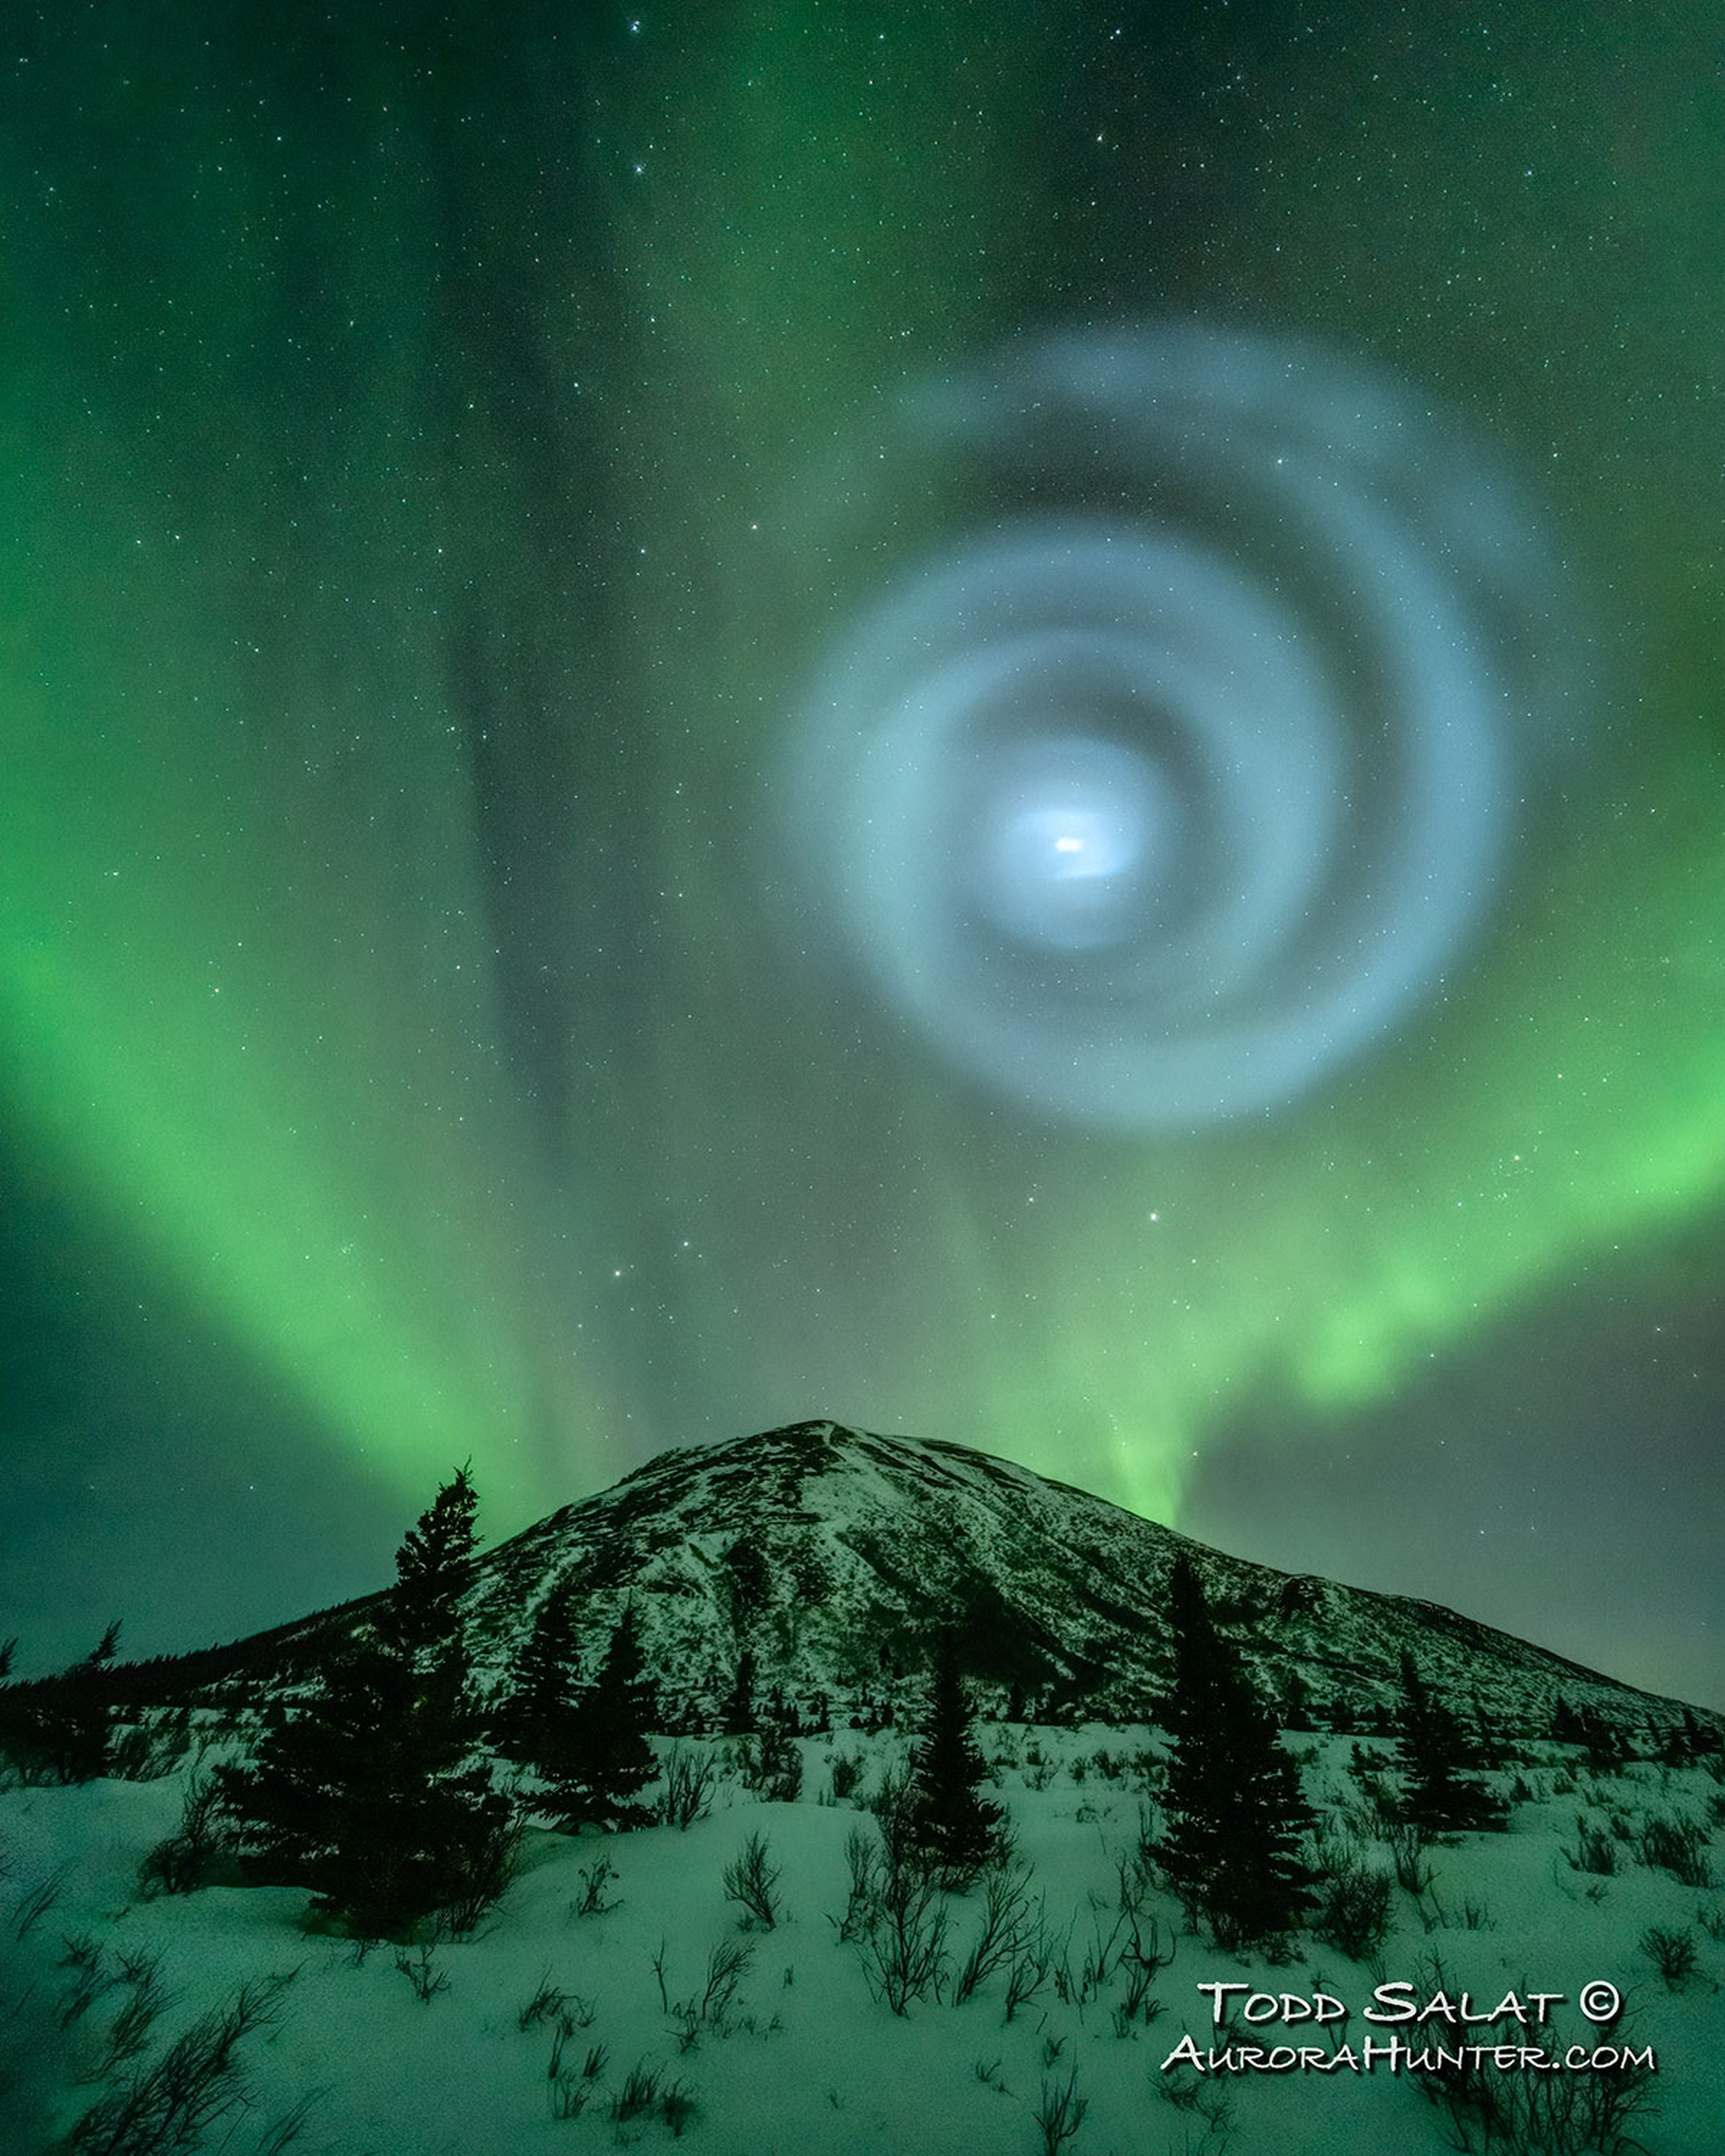 Spiral with aurora borealis